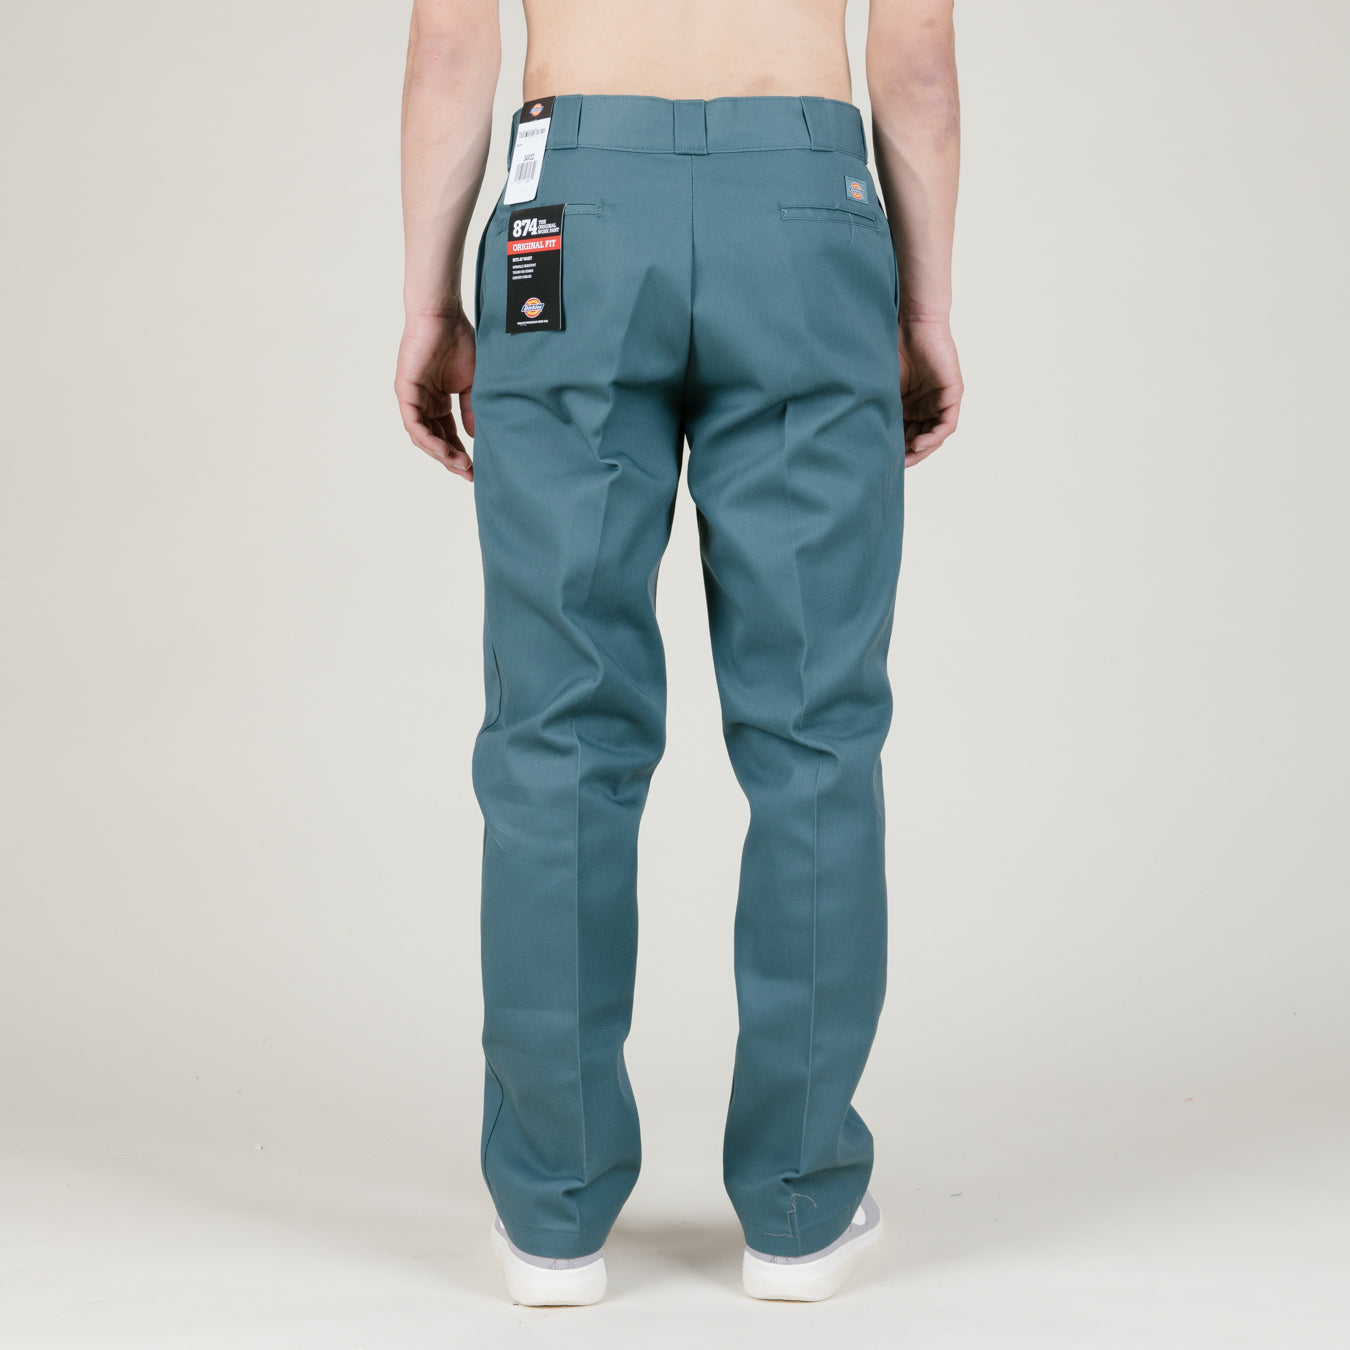 Dickies 874 original fit work pants in green